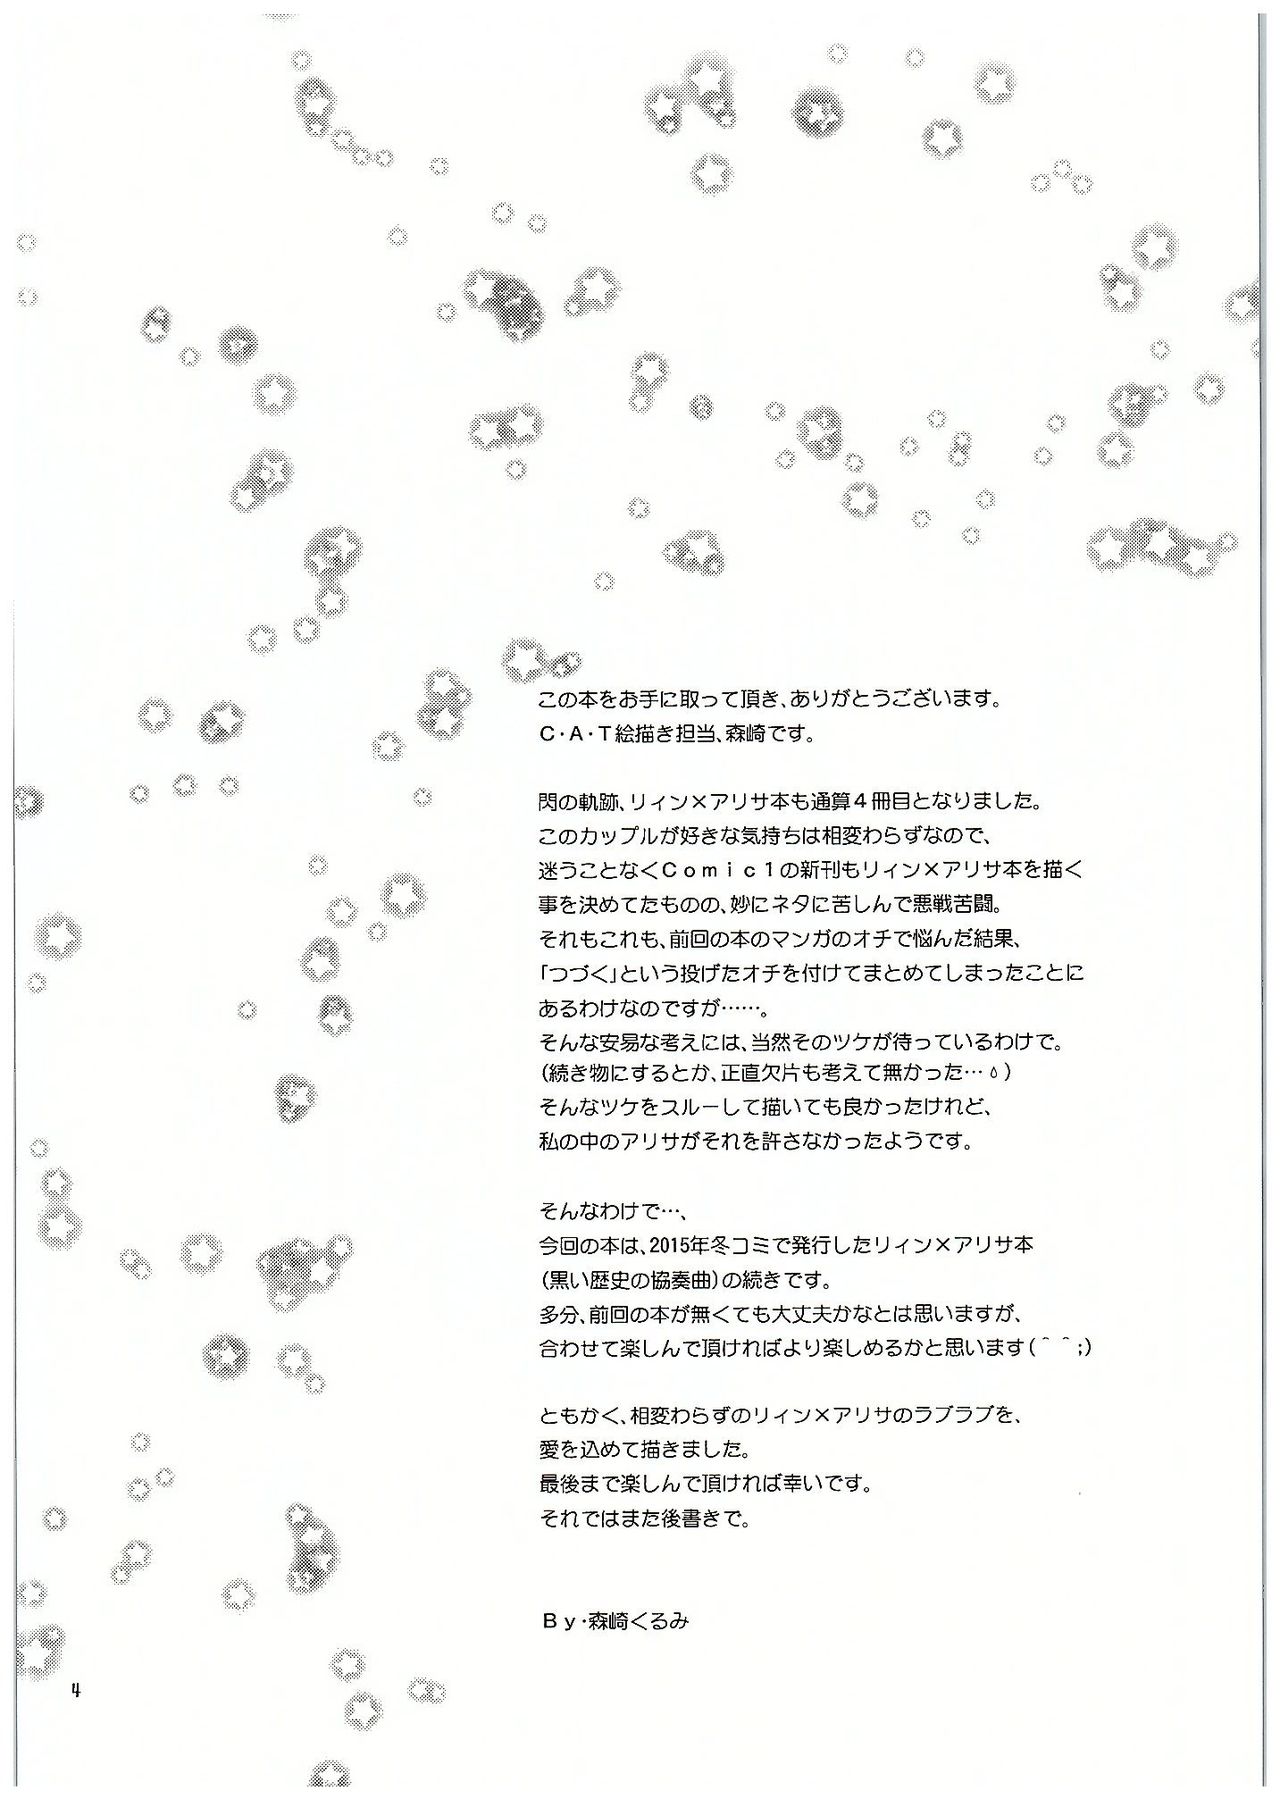 (COMIC1☆10) [C.A.T (Morisaki Kurumi)] Futari no HI・MI・TU (The Legend of Heroes: Sen no Kiseki) (COMIC1☆10) [C・A・T (森崎くるみ)] 二人のHI・MI・TU (英雄伝説 閃の軌跡)